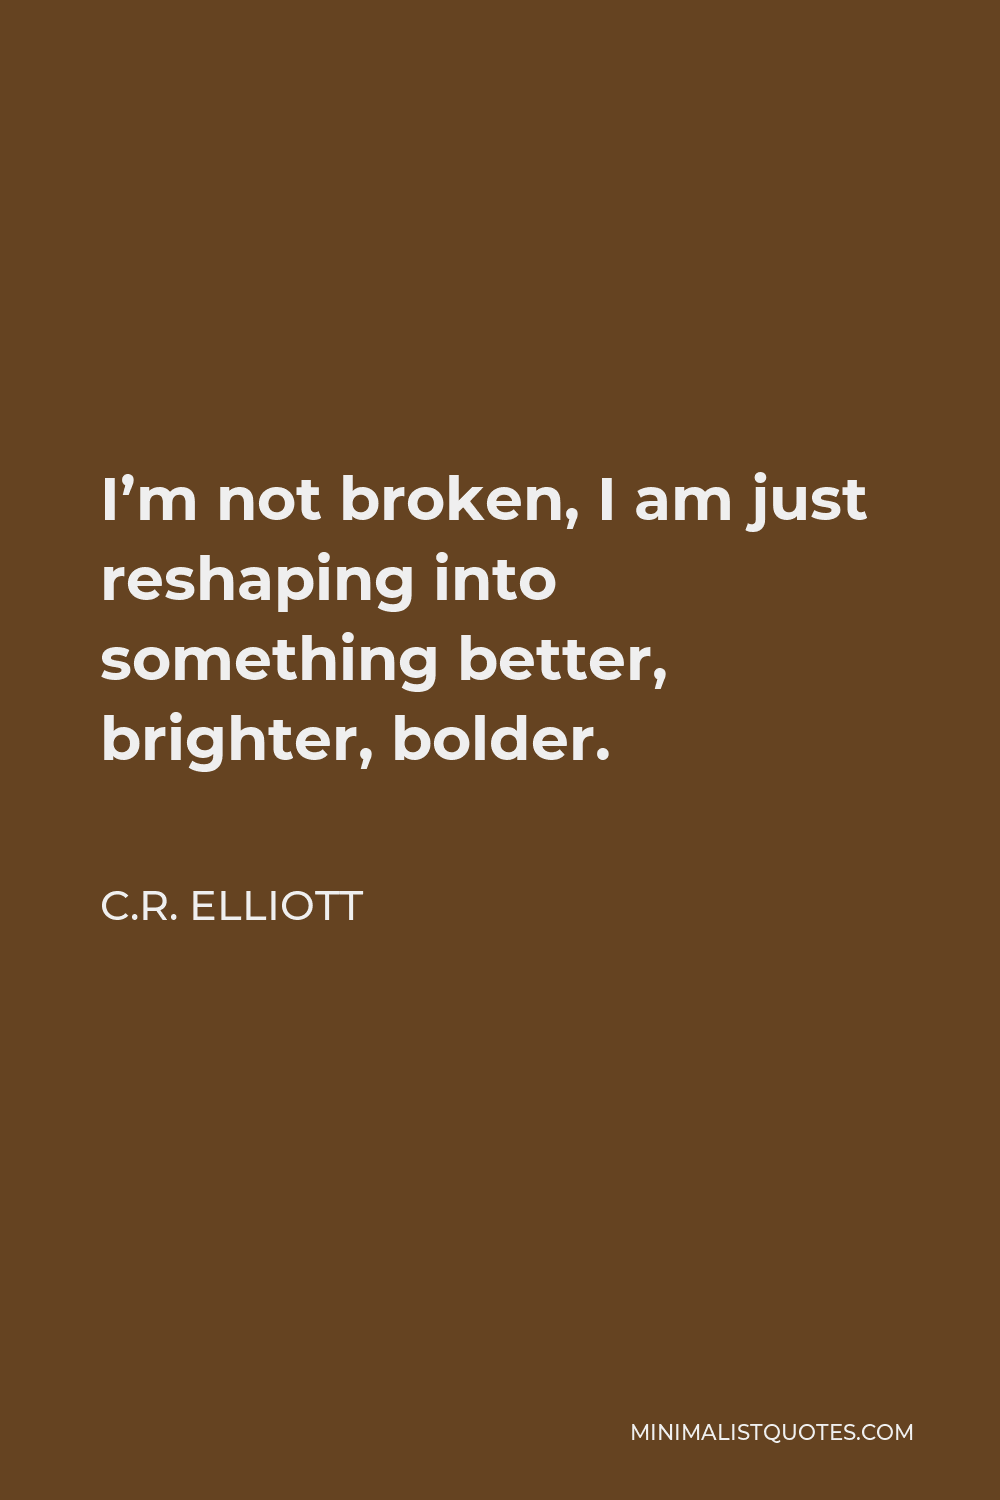 C.R. Elliott Quote - I’m not broken, I am just reshaping into something better, brighter, bolder.